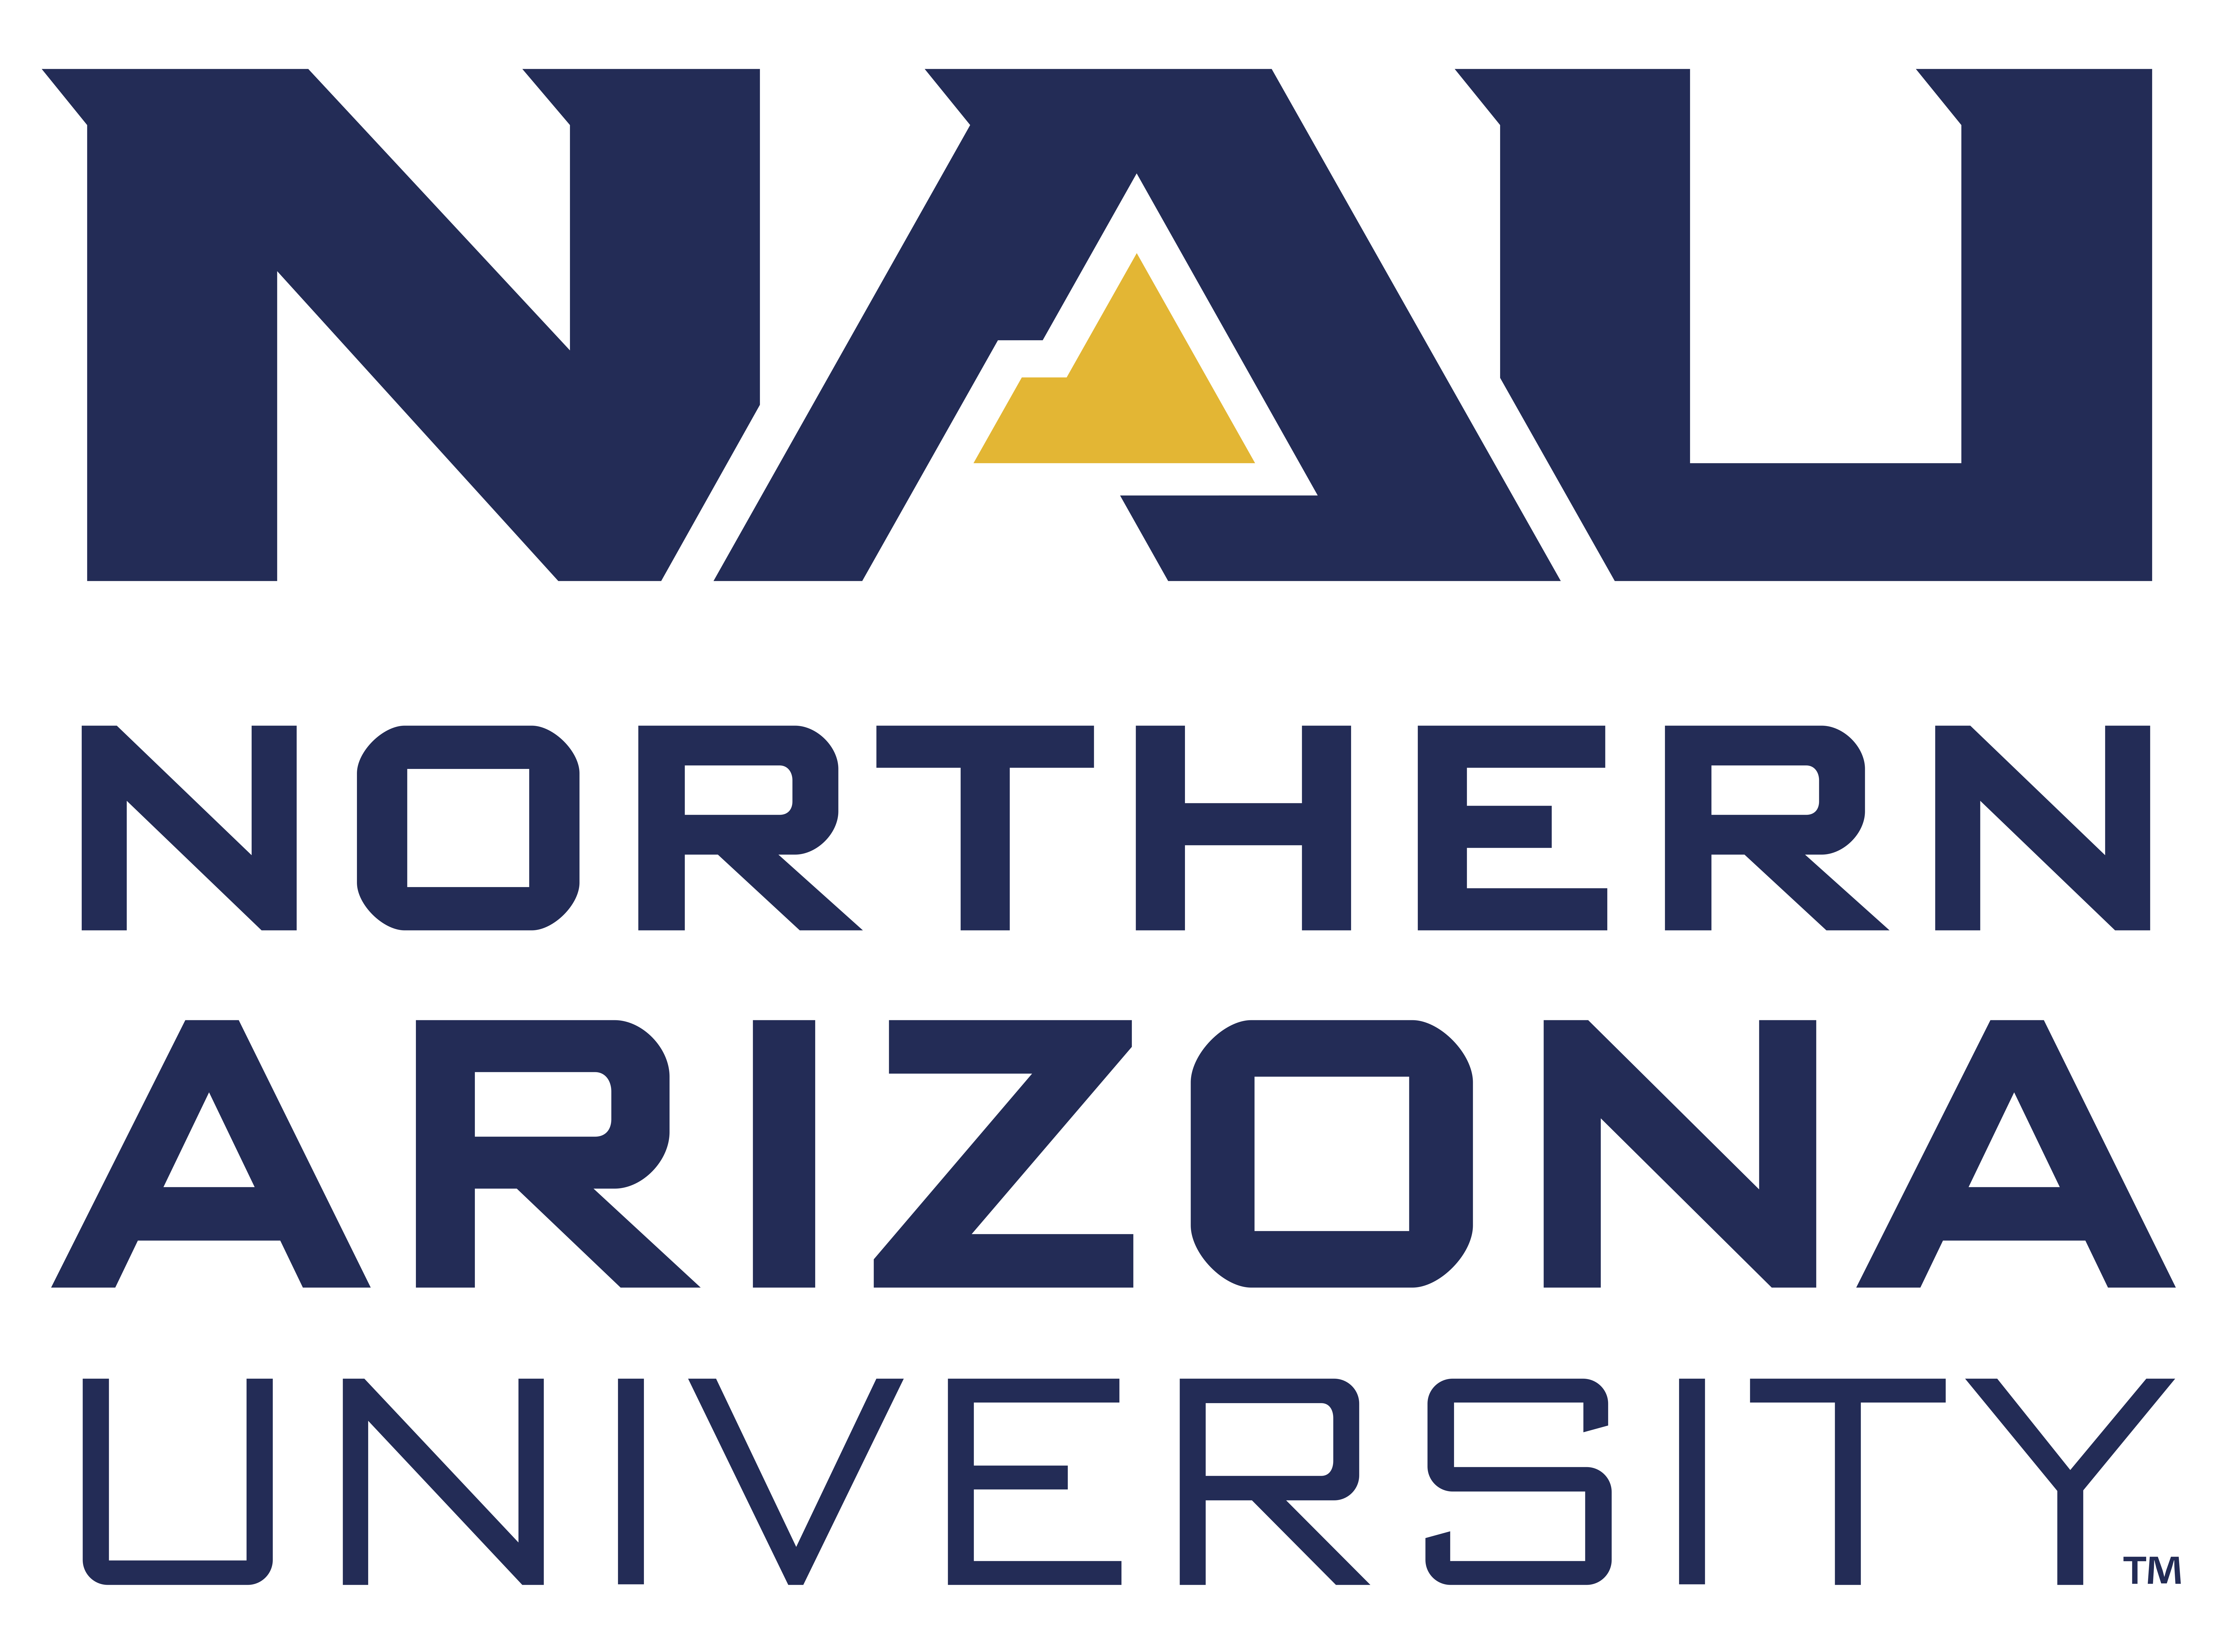 Northern Arizona University post order